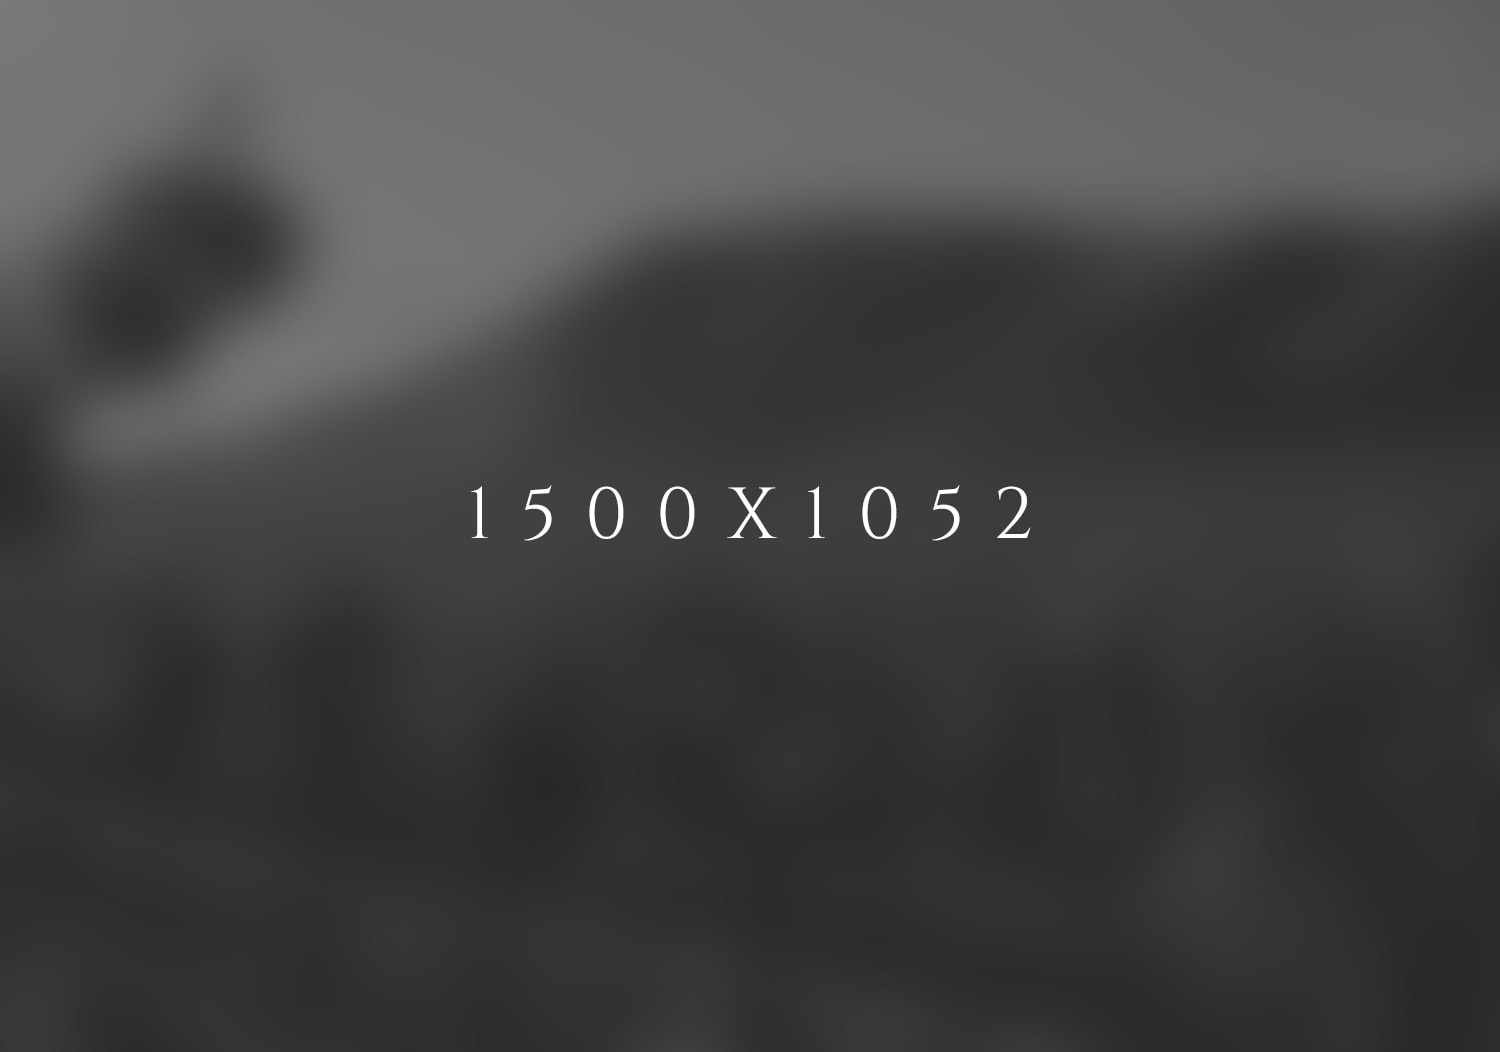 1500x1052-min - Copy (13).jpg